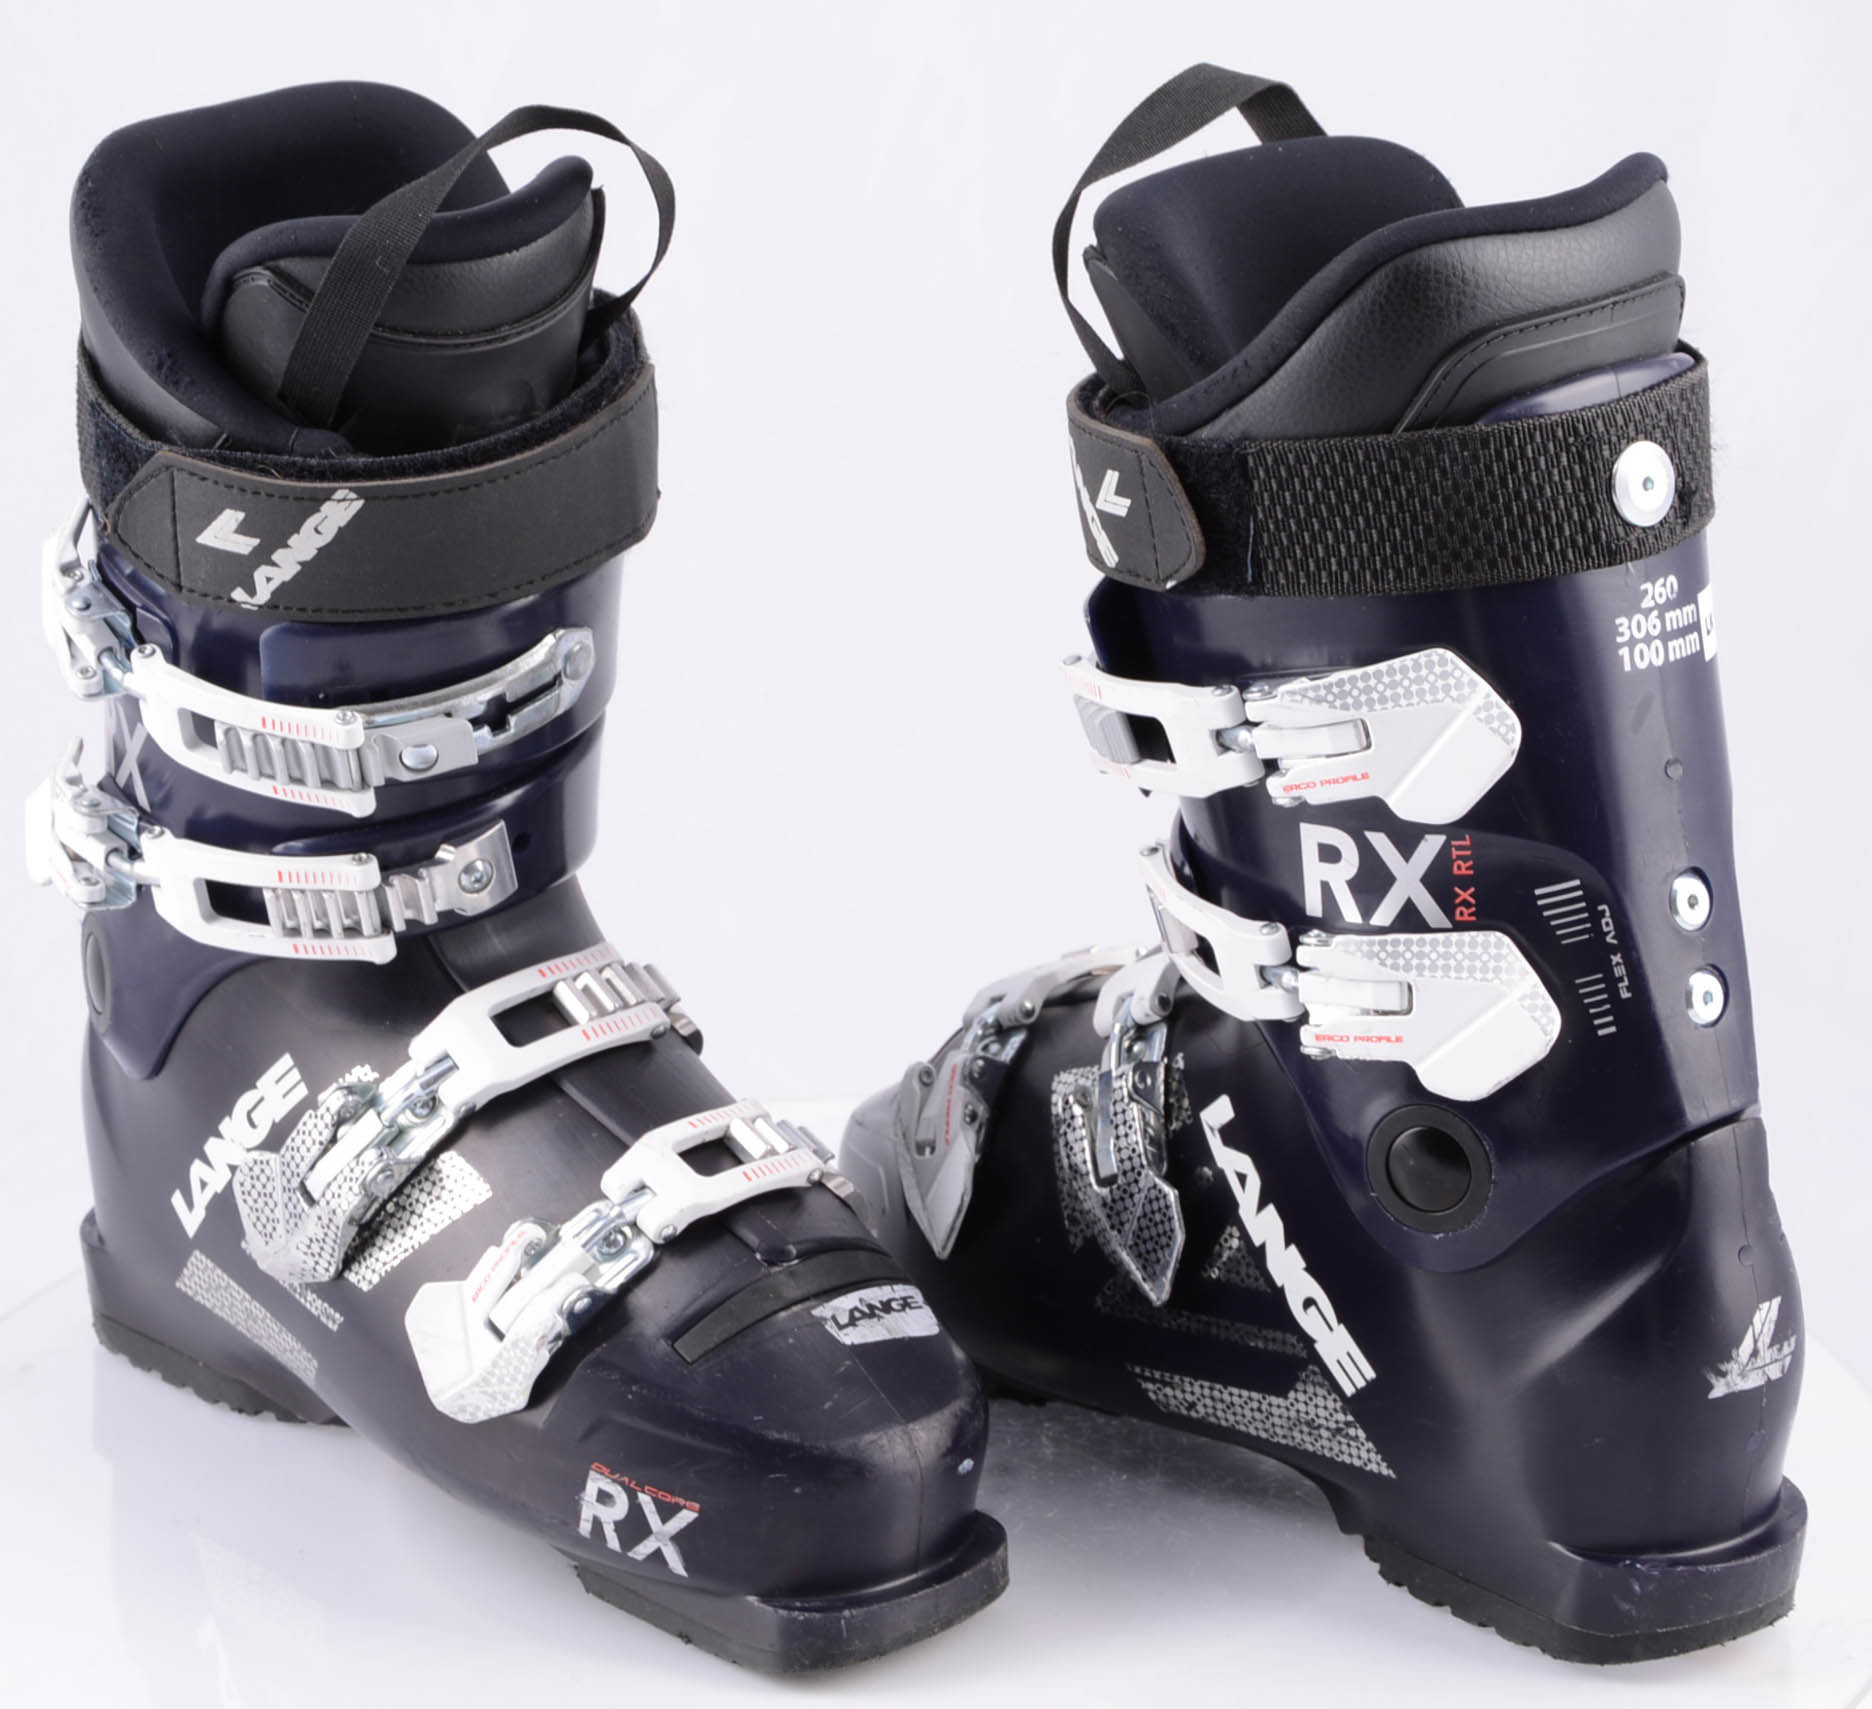 women's ski boots LANGE RX 80 RTL, BLUE/white, micro, macro, FLEX adj, DUAL core ( TOP condition ) - Mardosport.com